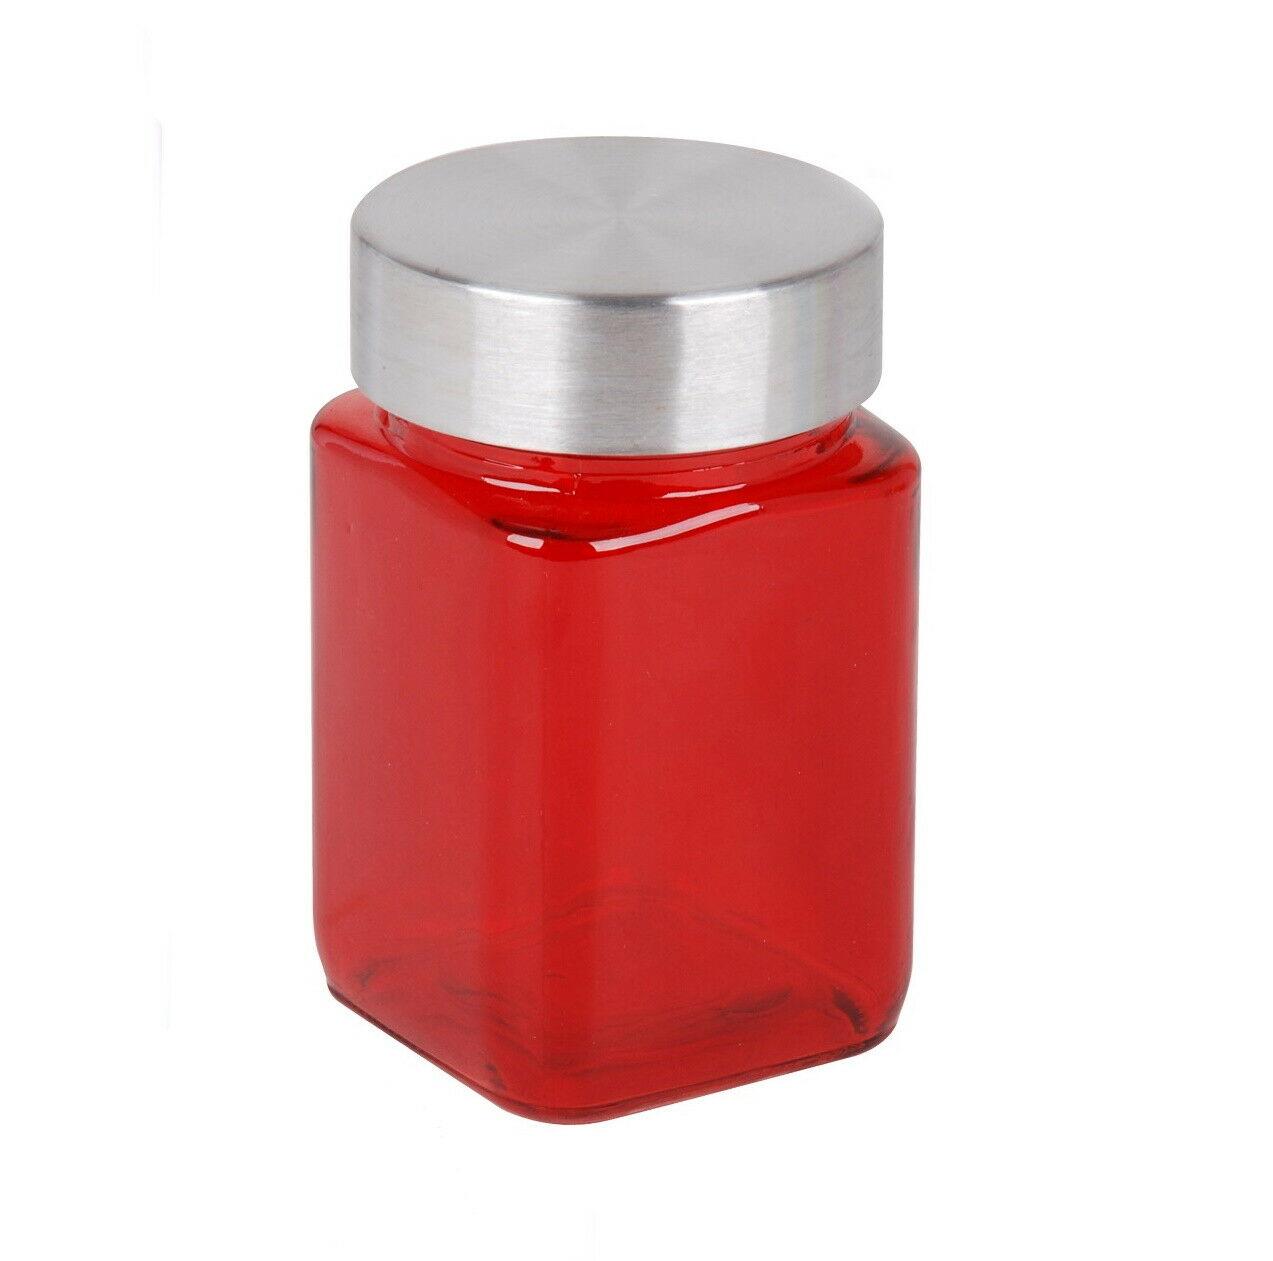 4 PCS Glass Spice Jars Square Coloured 300ml Seasoning Bottles Herbs Spices Storage Airtight Preserve Small Jars With Screw Top Cap Lids Condiment Jam Jars 300ml 